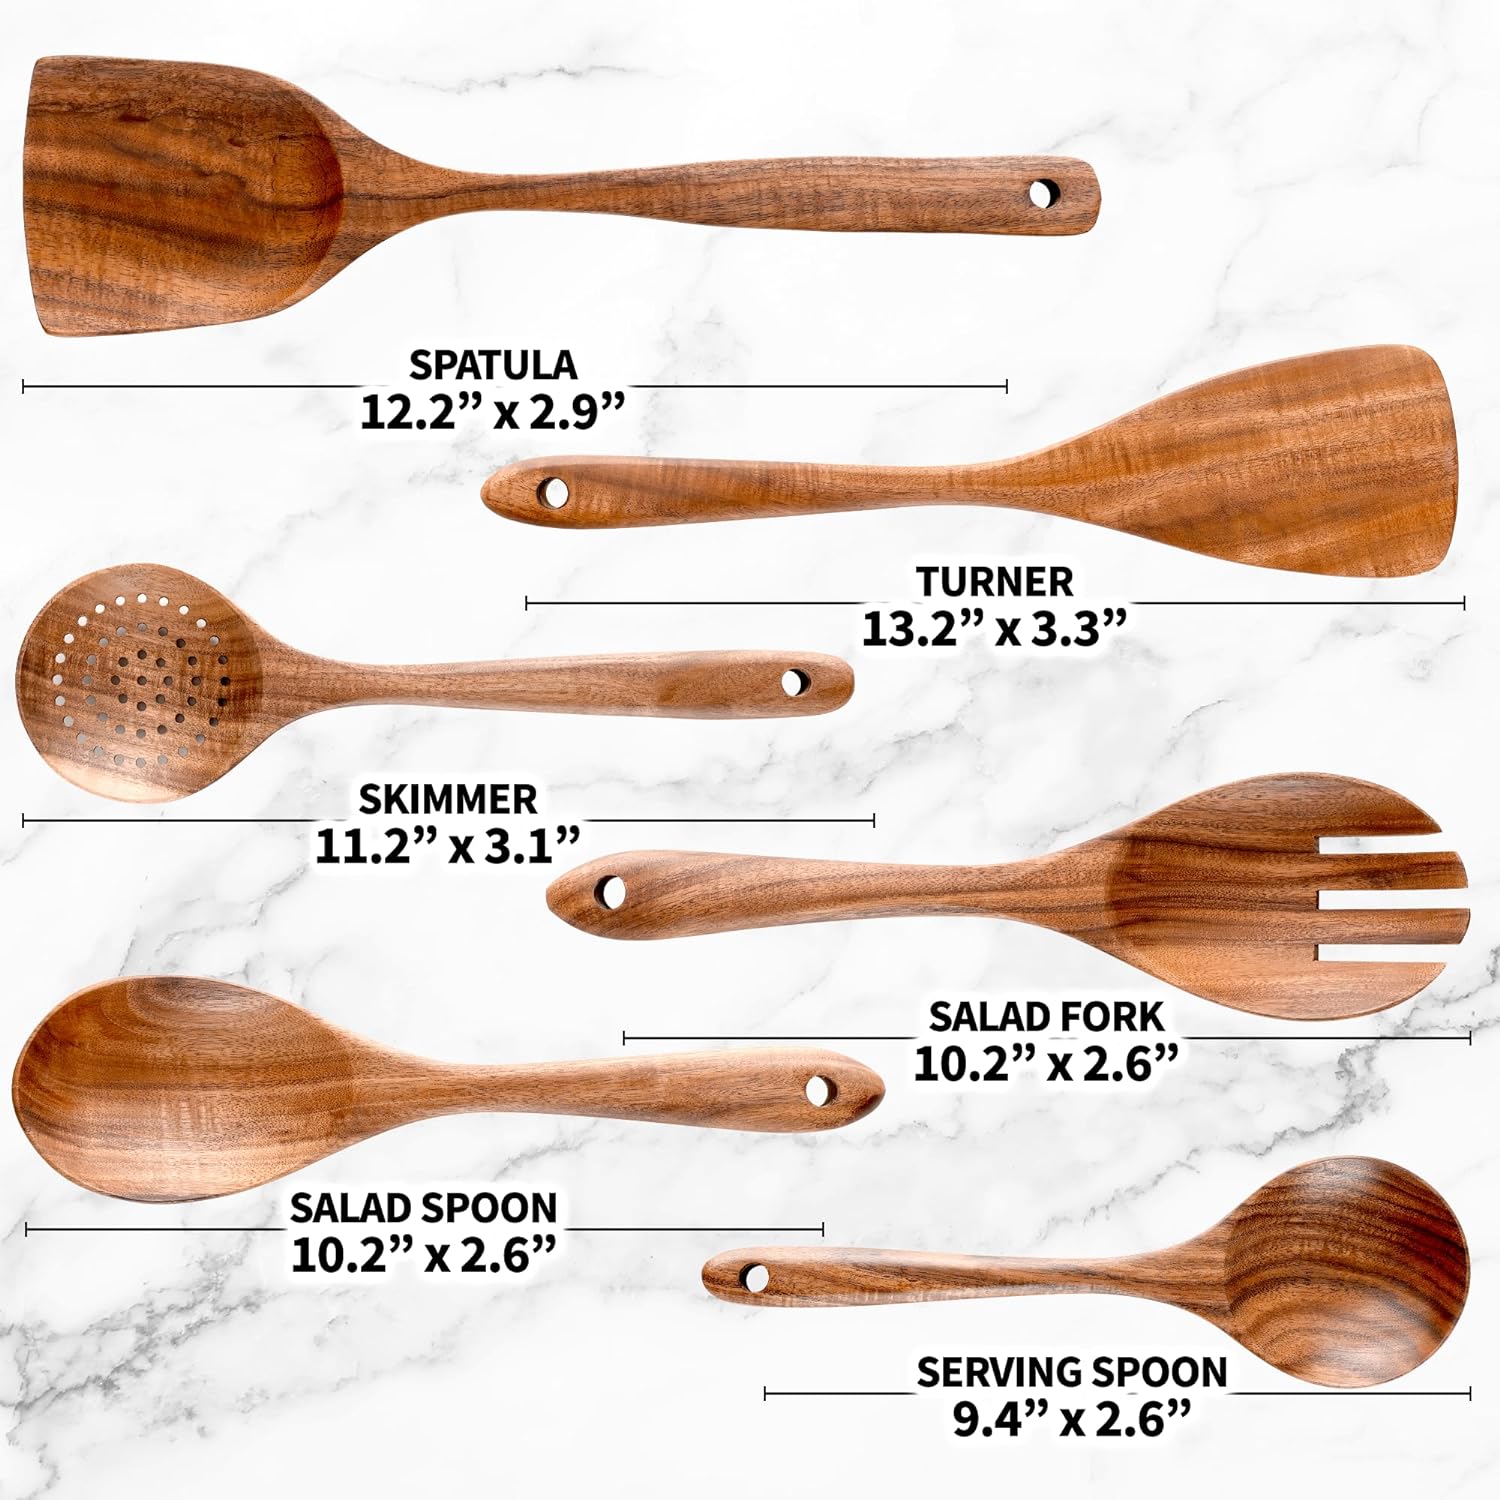 Teak Wooden Cooking Spoons (6 Pc Set)